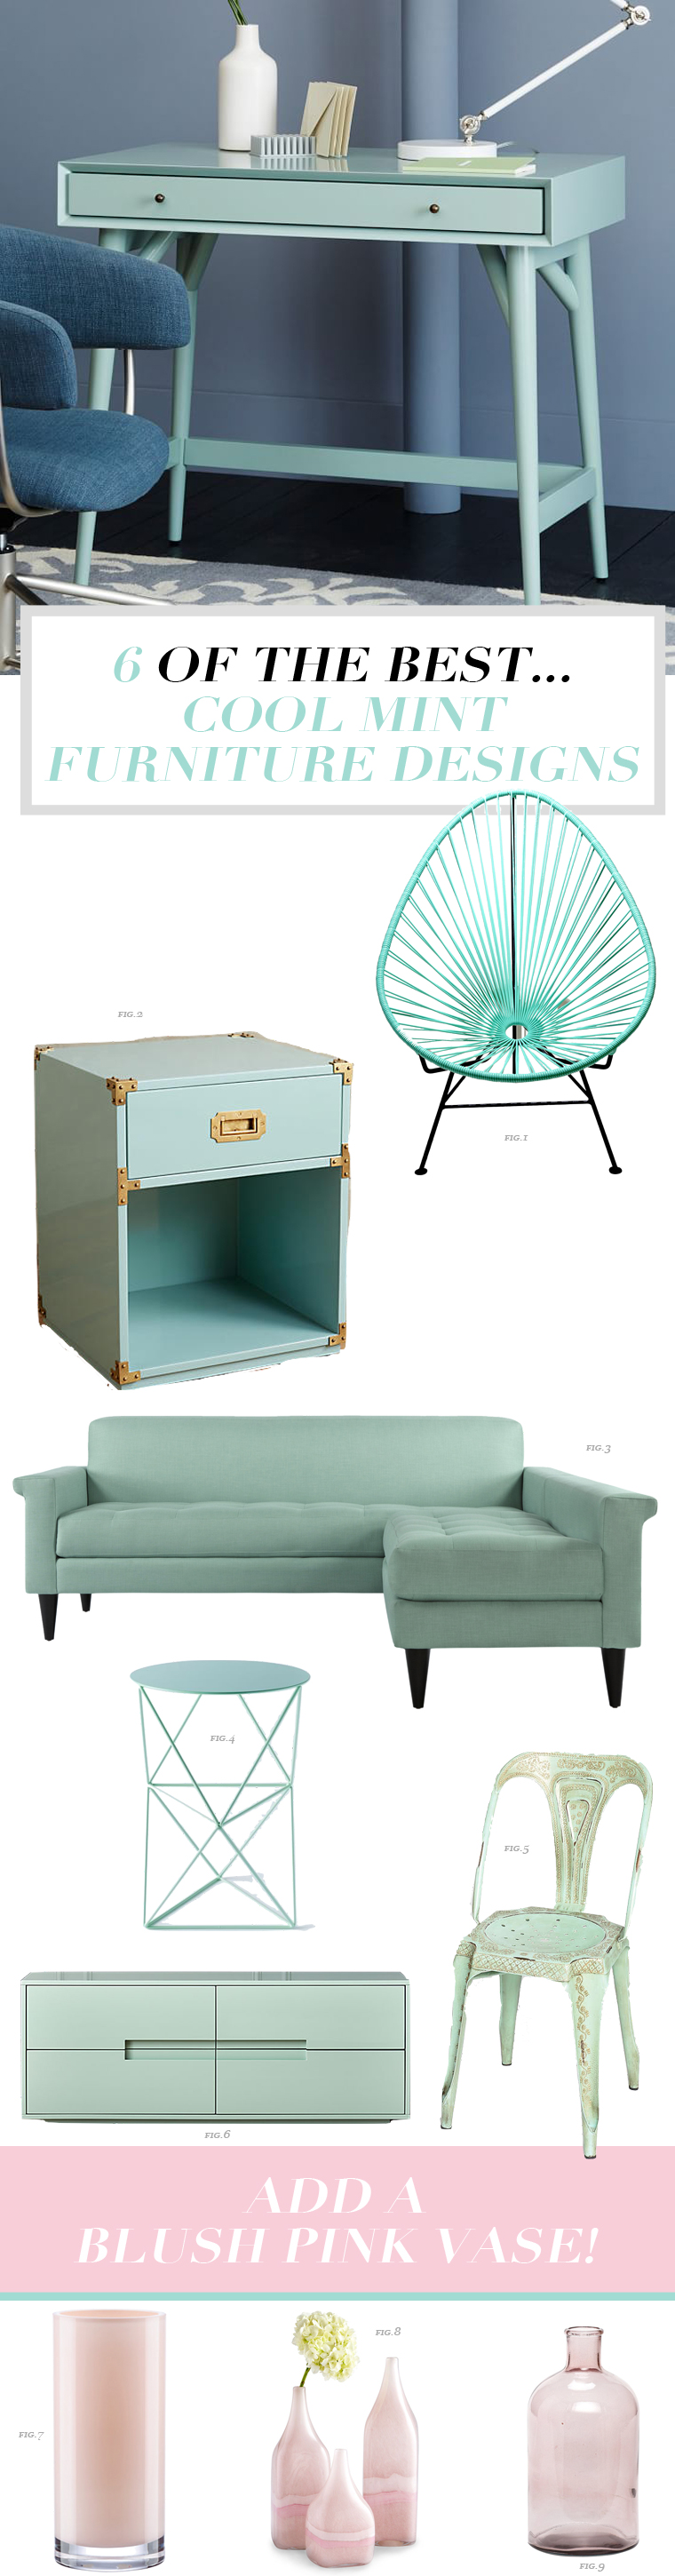 cool-mint-furniture